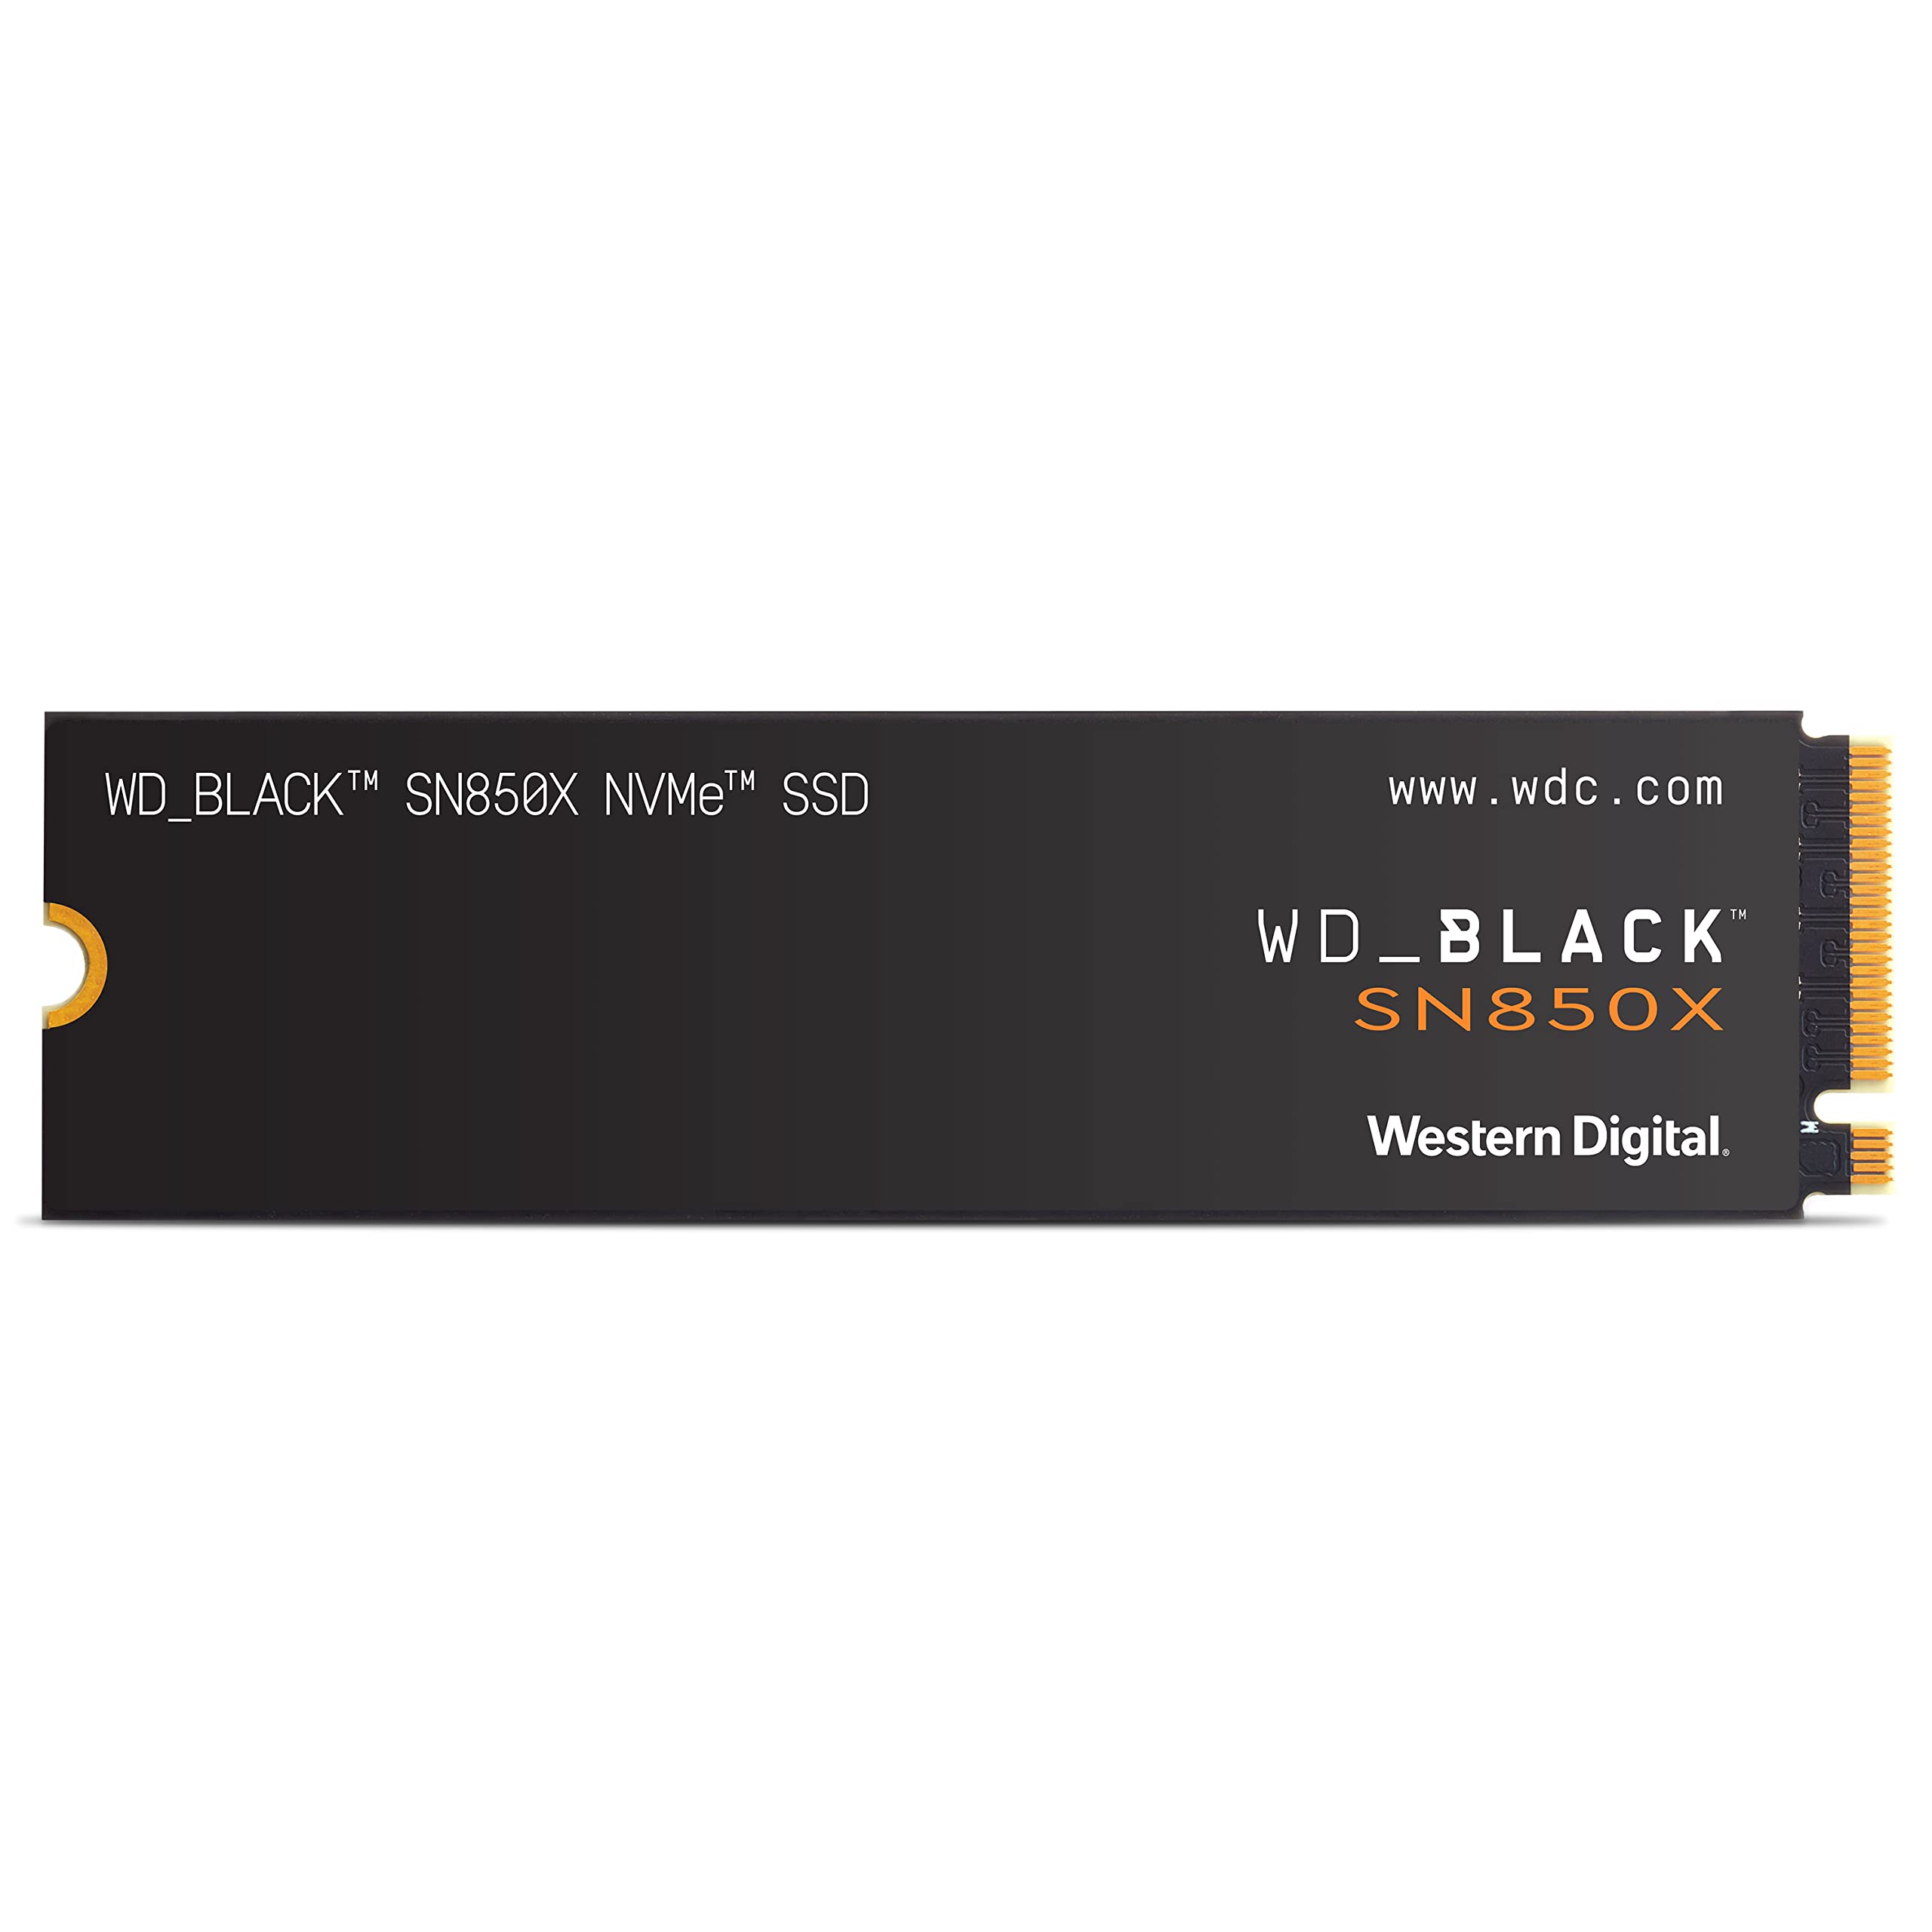 WD BLACK 4TB SN850X NVMe, Amazon, $283.49 free shipping